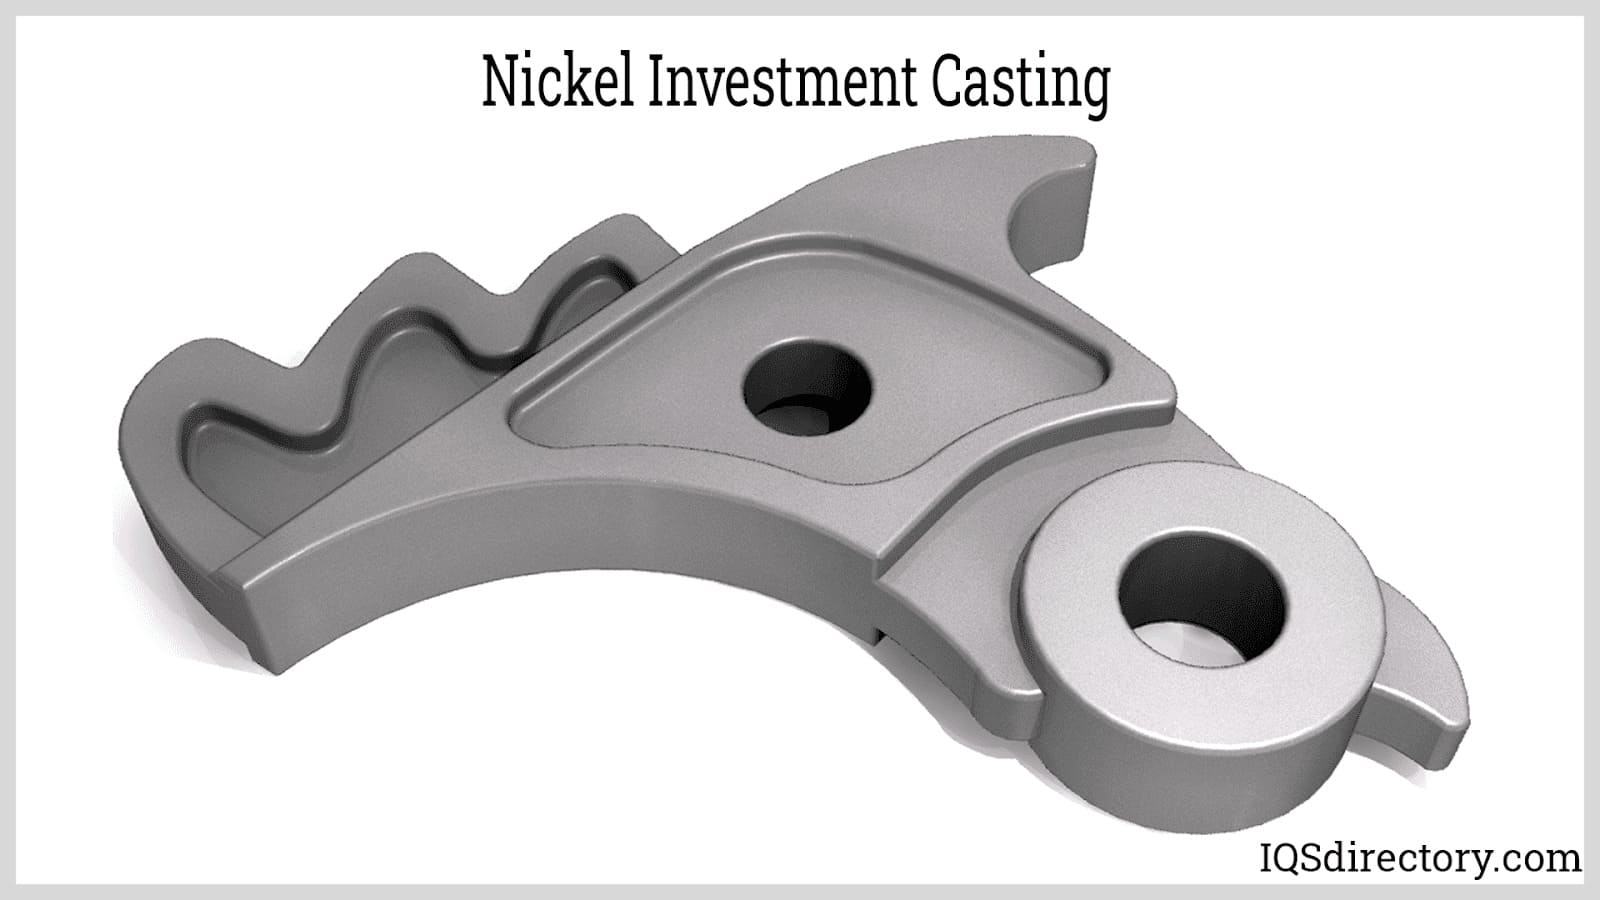 Nickel Investment Casting